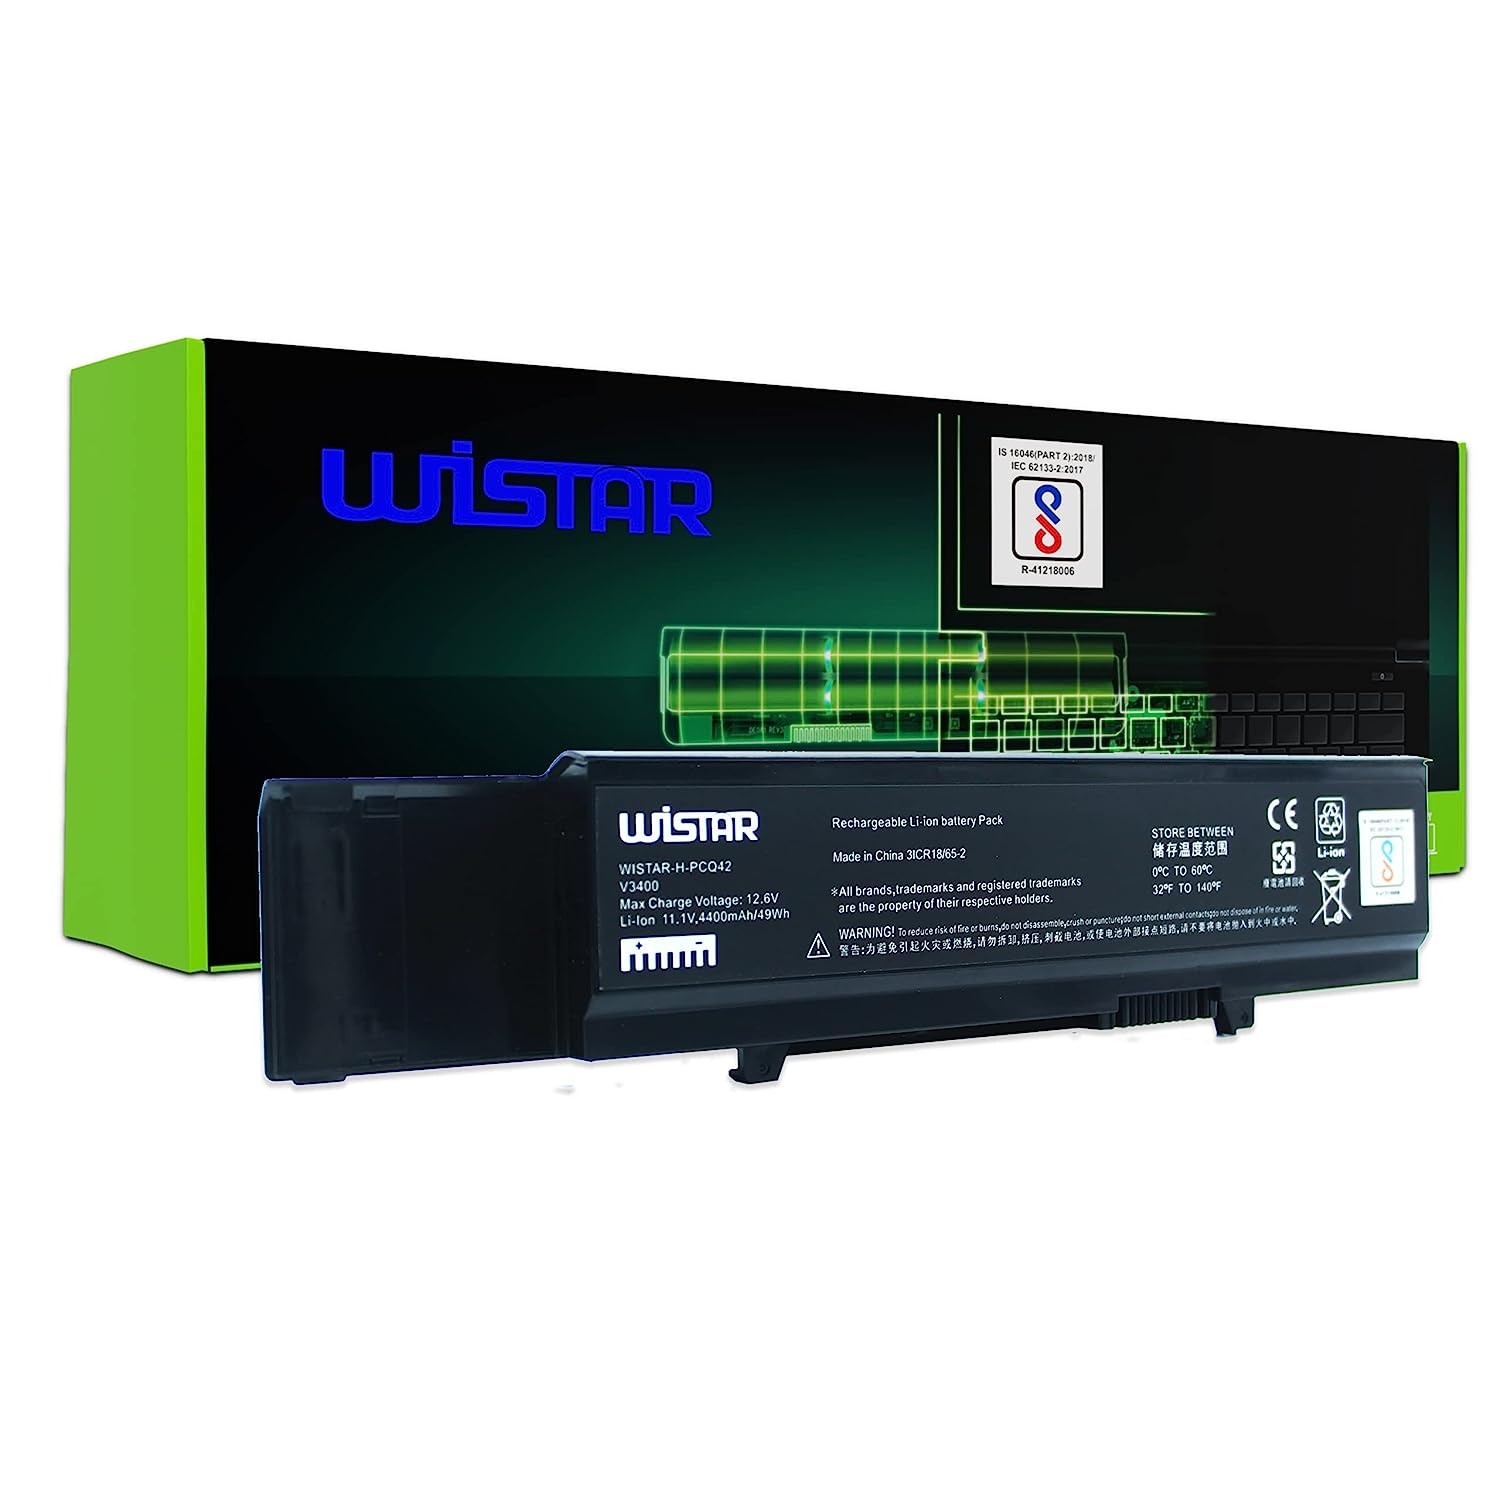 WISTAR Laptop Battery Compatible for Dell Vostro 3400 3500 3700 P/N 7FJ92 Y5XF9 CYDWV Y5XF9 7FJ92 4JK6R 04D3C 312-0997 312-0998 004D3C 004GN0G 04GN0G 04JK6R 07FJ92 0TXWRR CYDWV TXWRR TY3P4